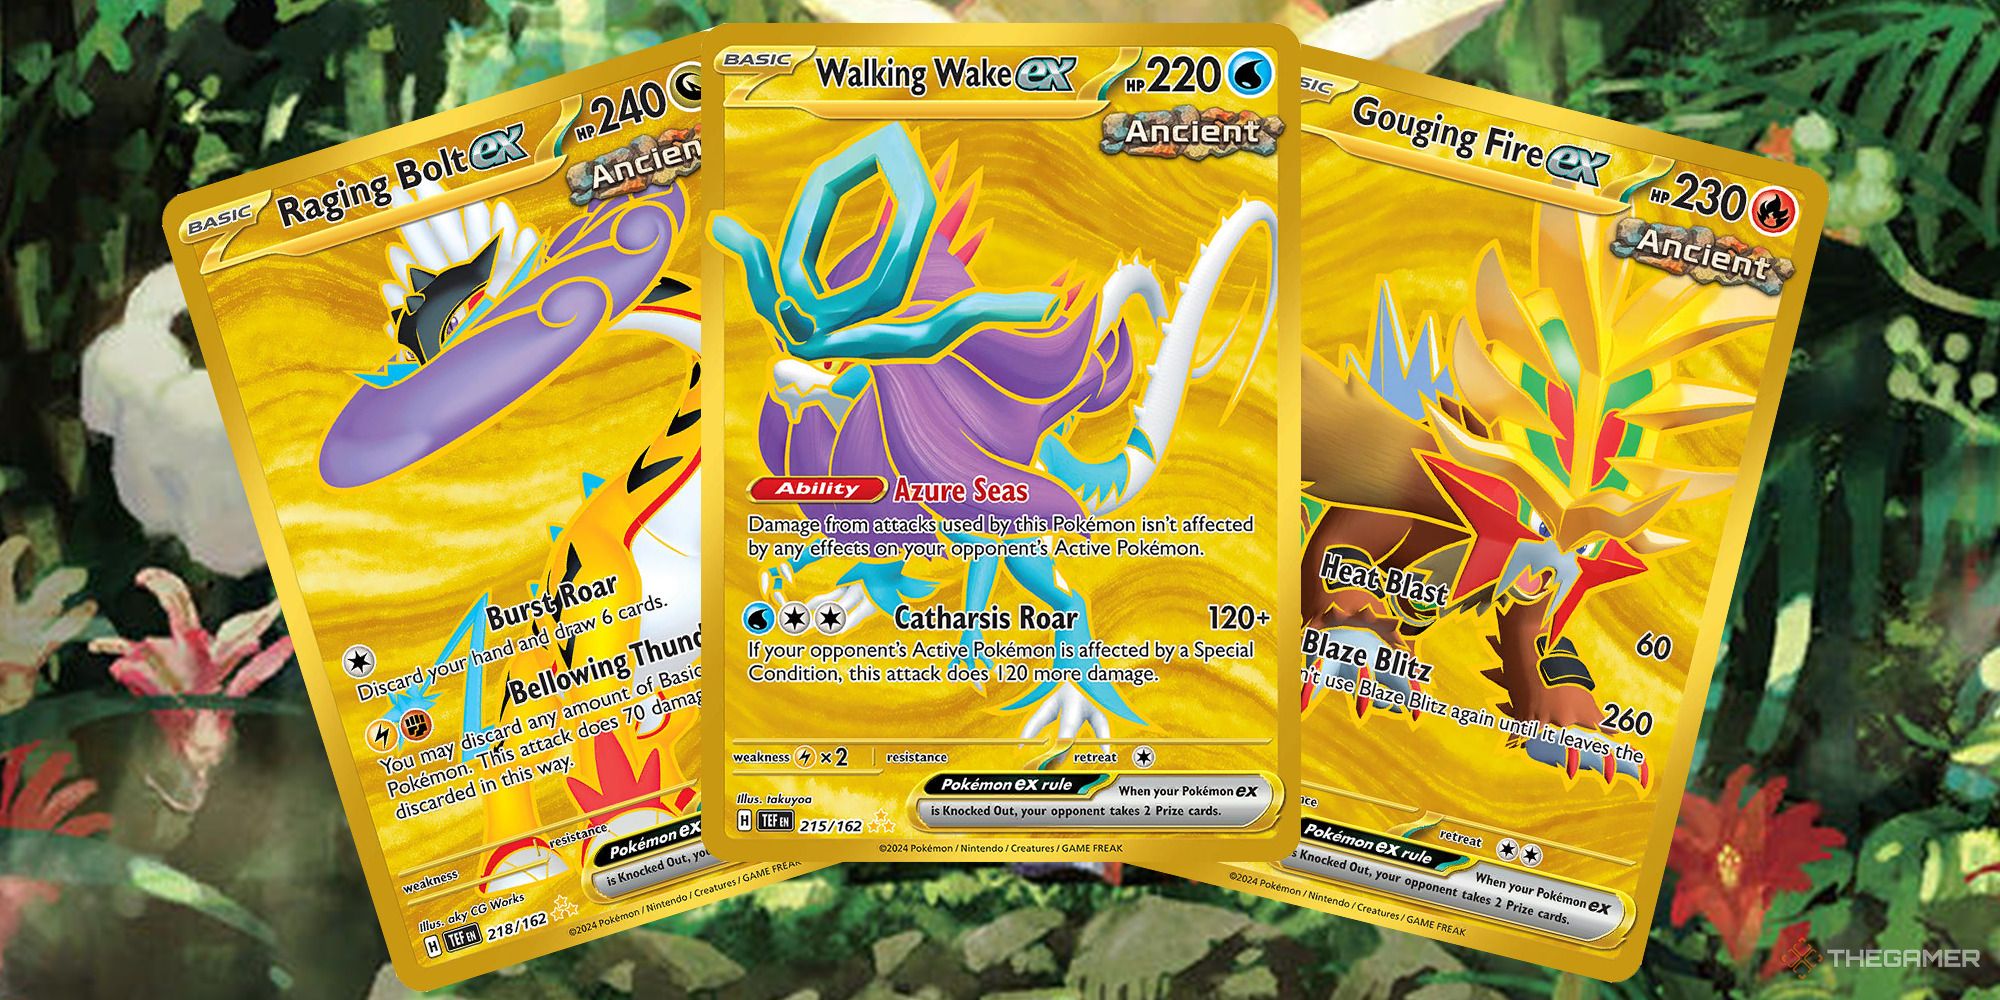 Raging Bolt, Walking Wake, and Gouging Fire EX golden variant cards